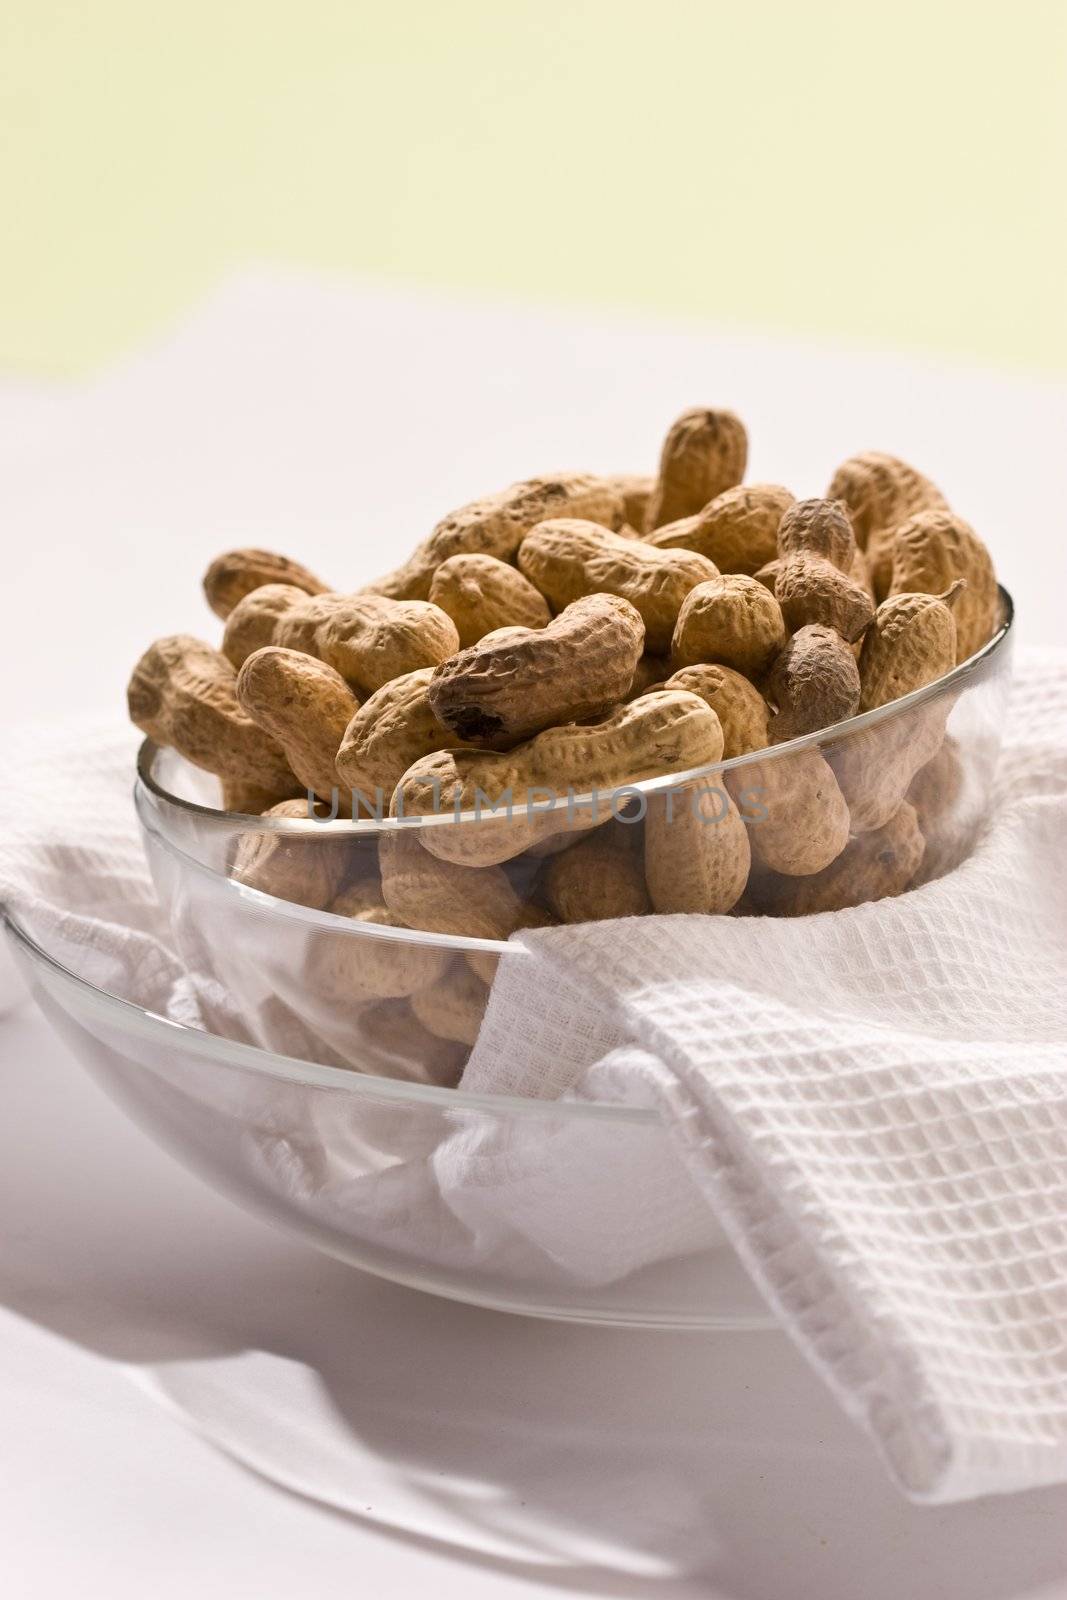 Foodstuff theme: peanut on the glassy bowl